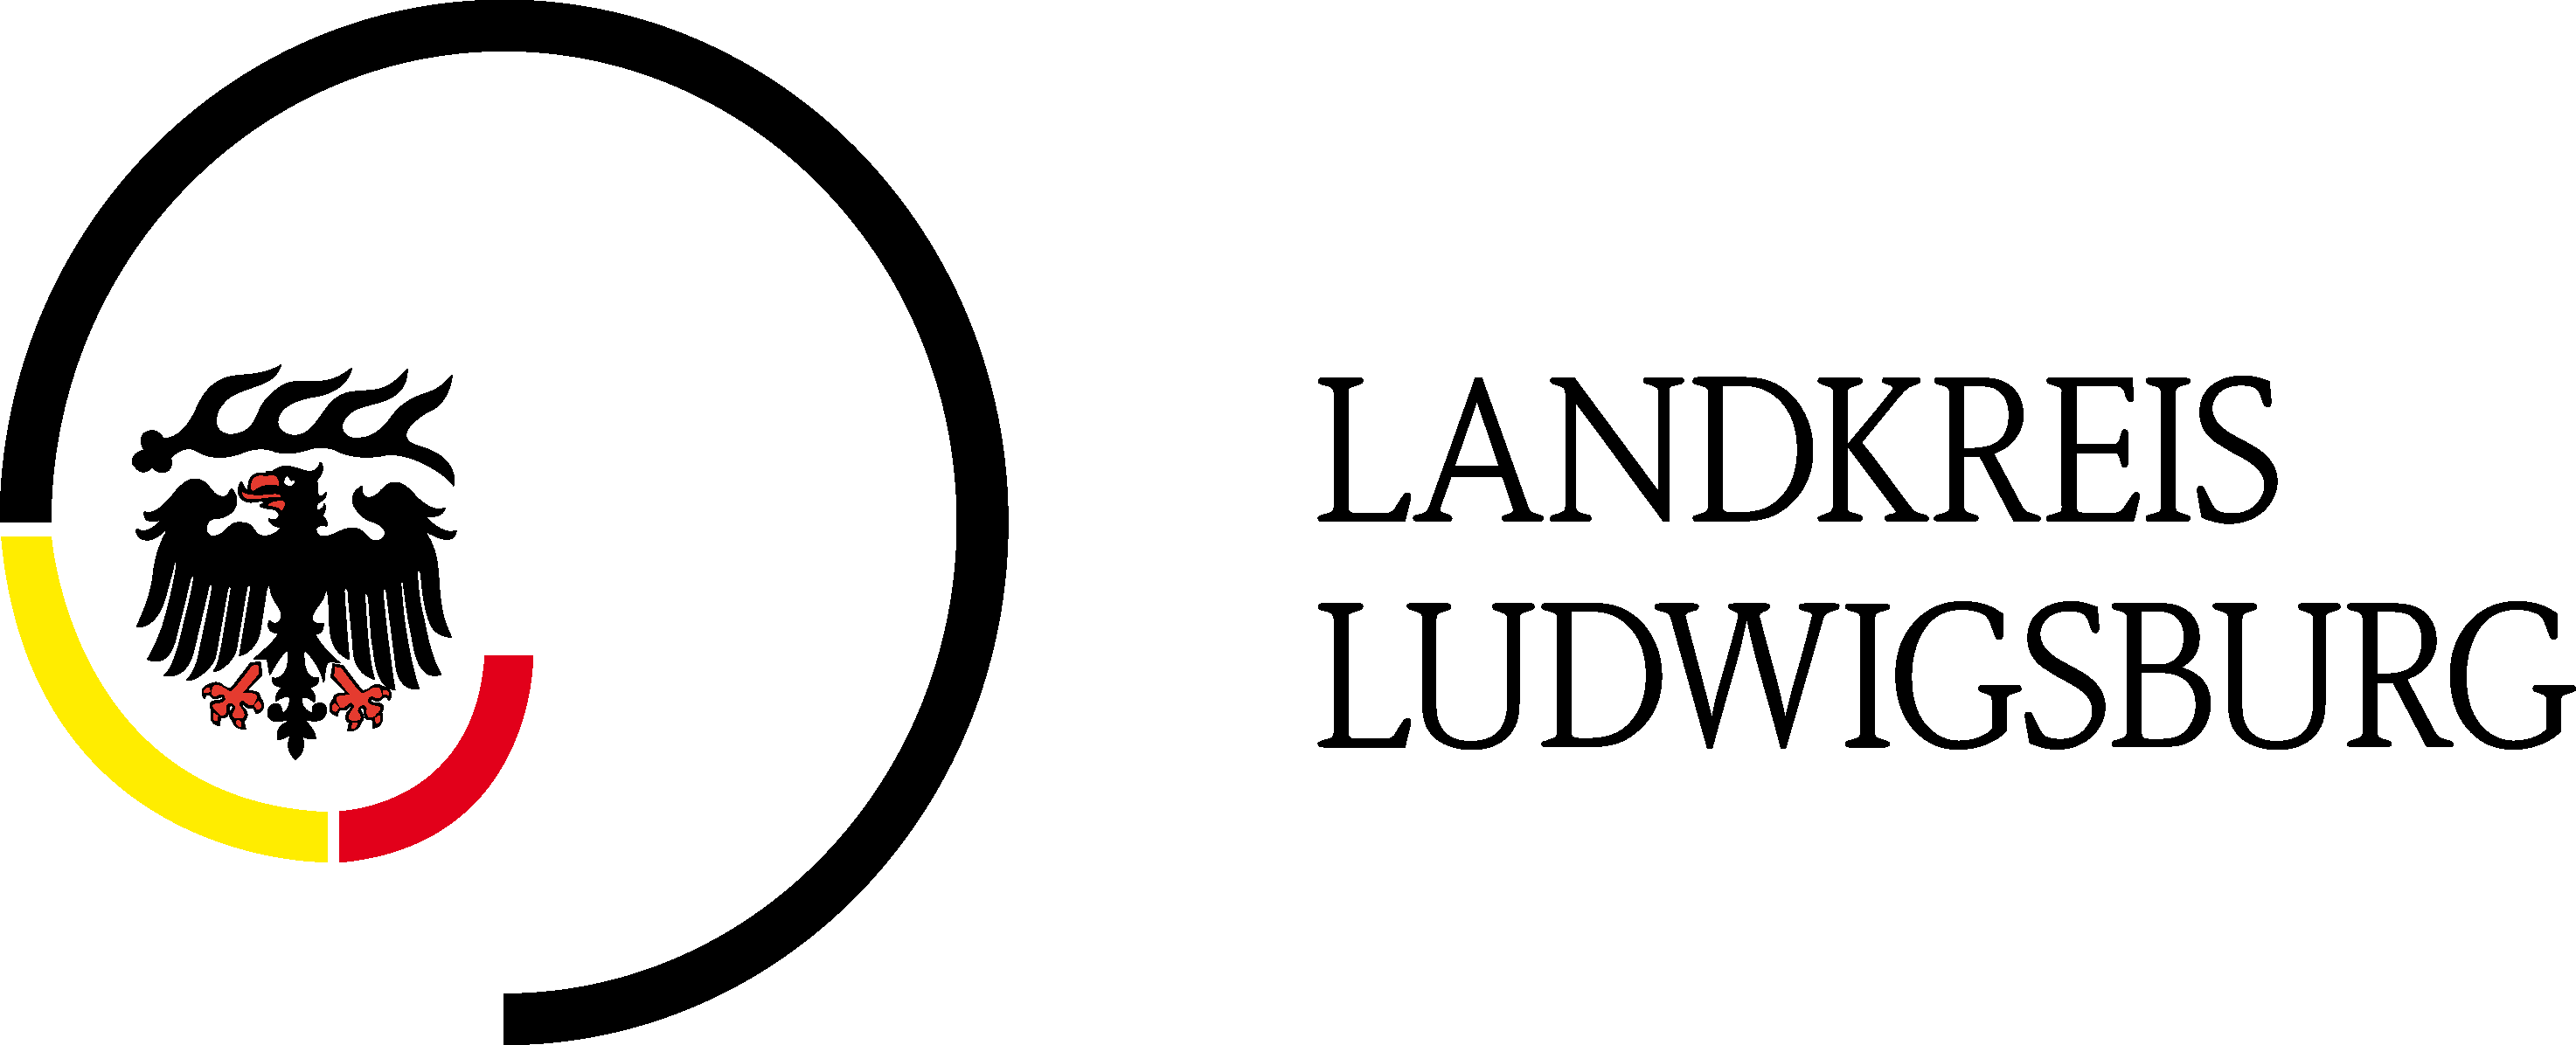 HSRT_logo